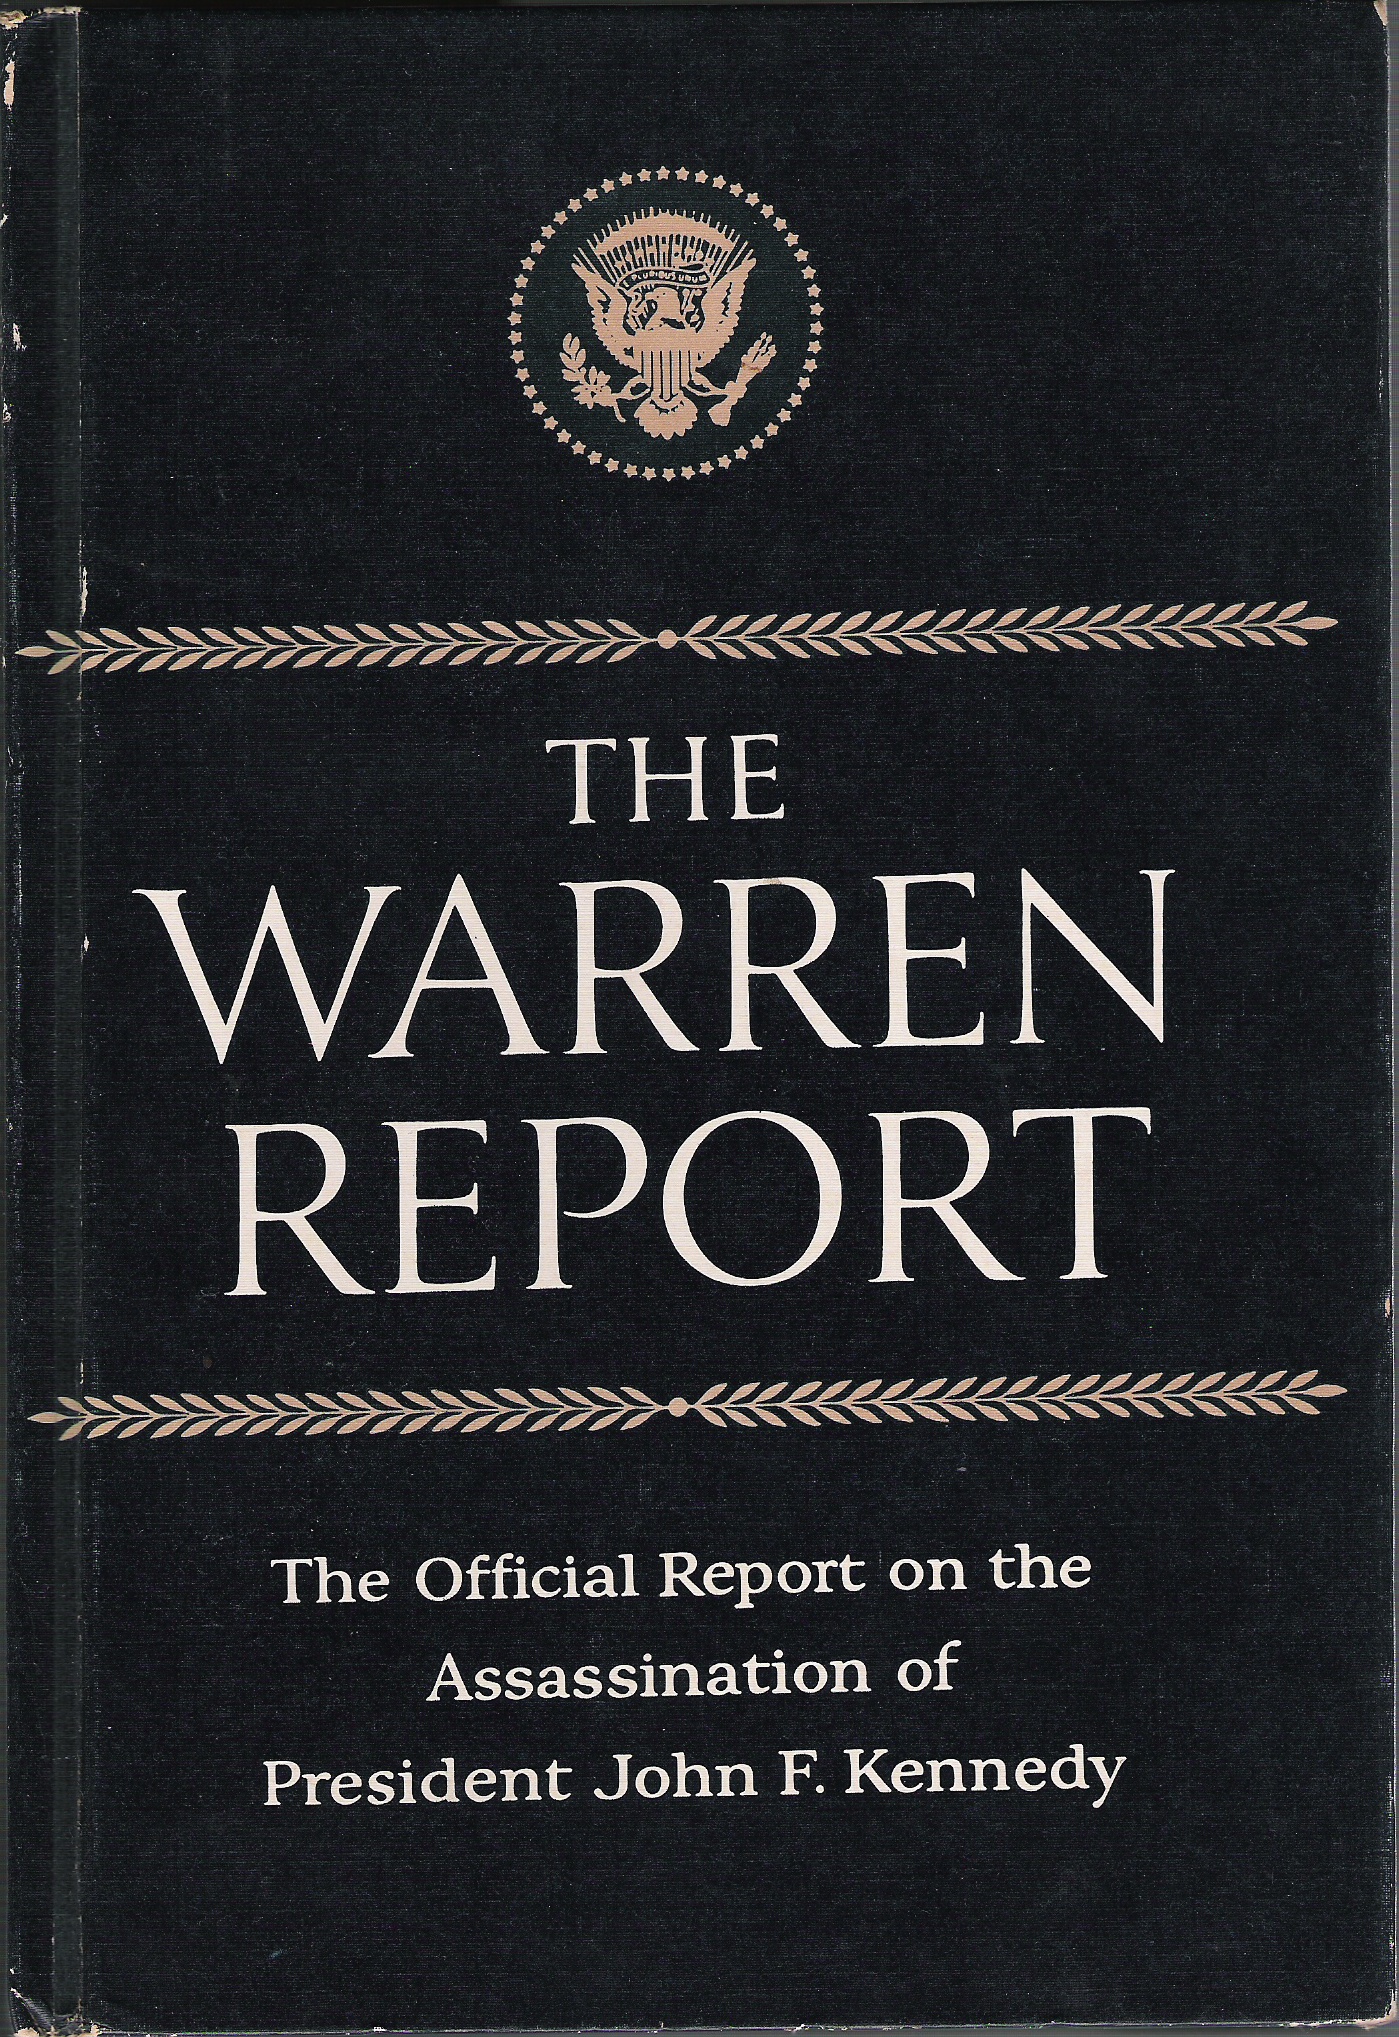 Warren Commission Report